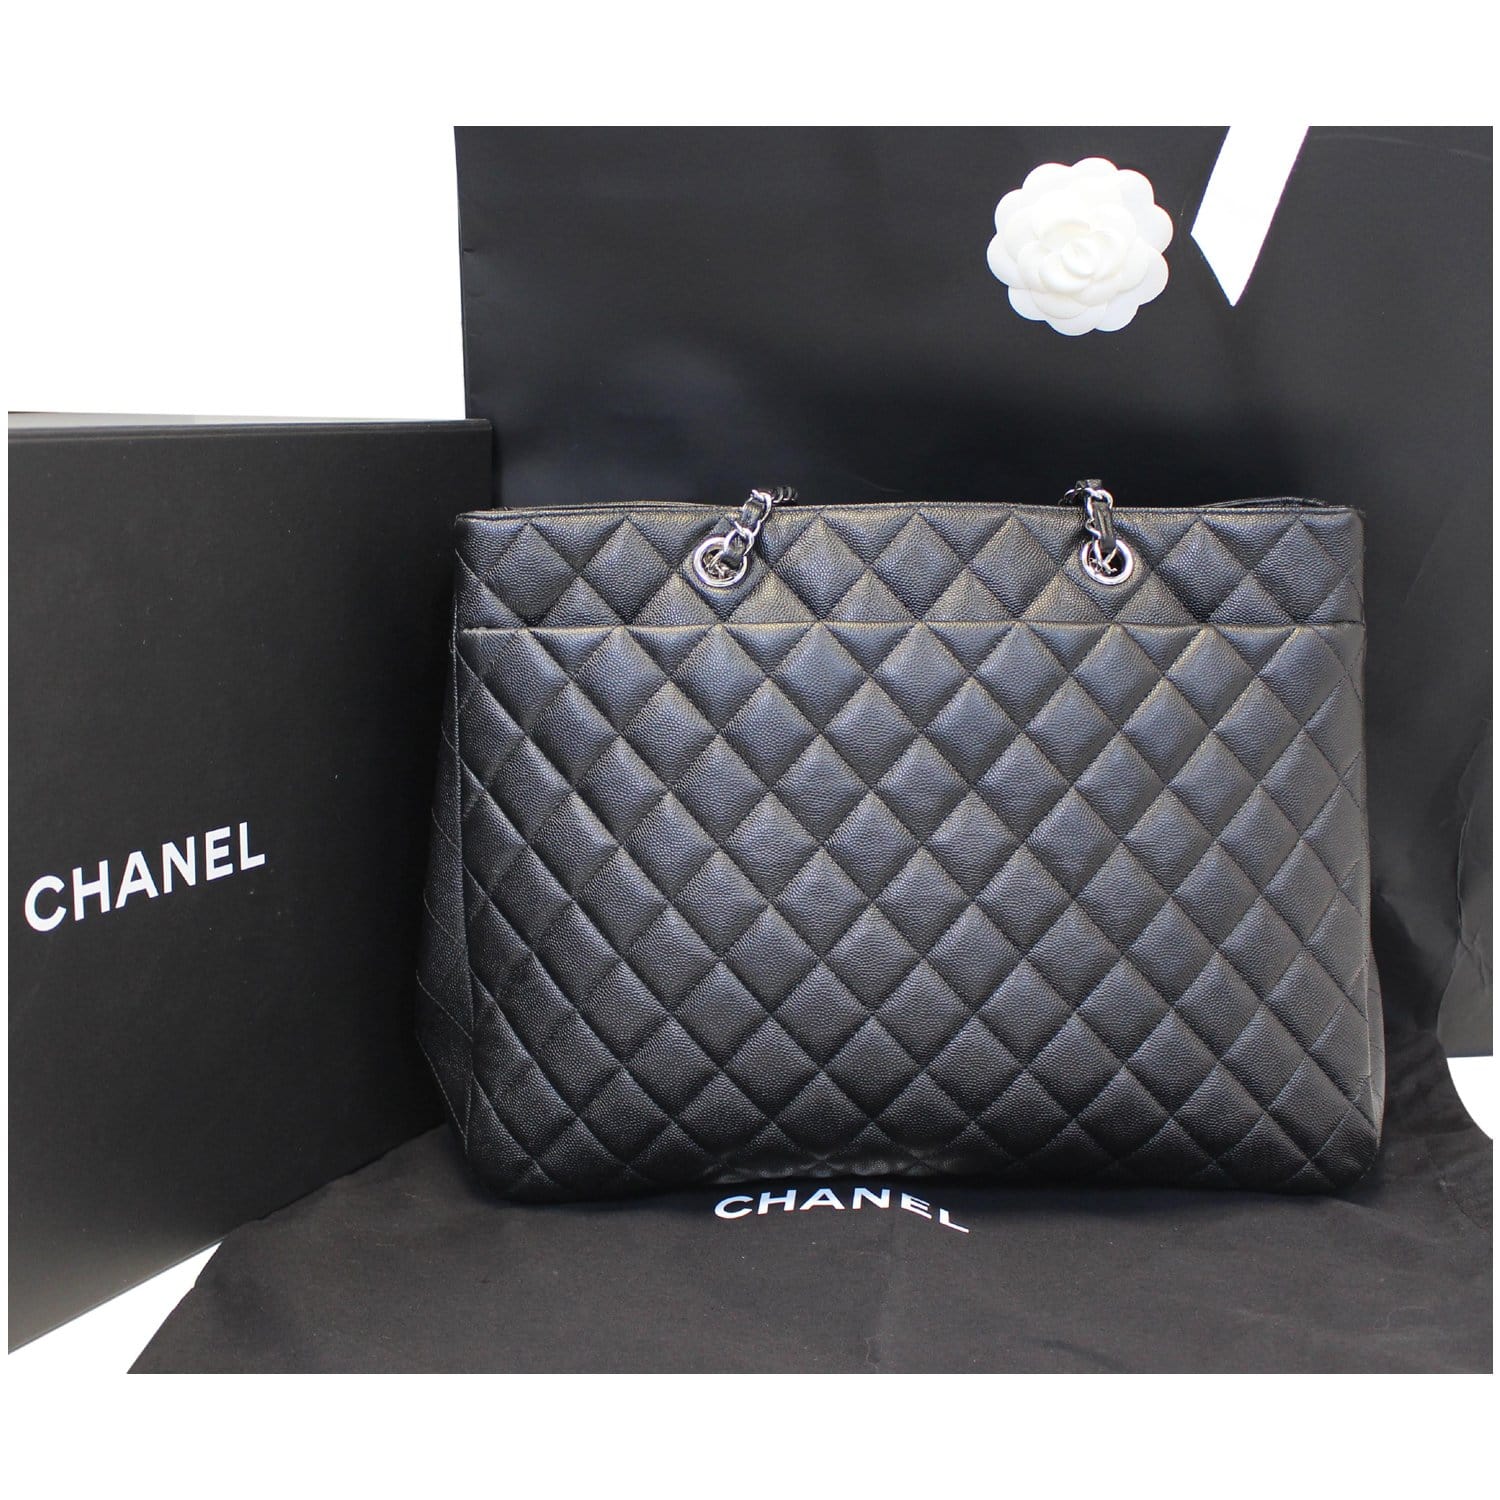 Chanel mini bag, Chanel handbags classic, Large leather handbags